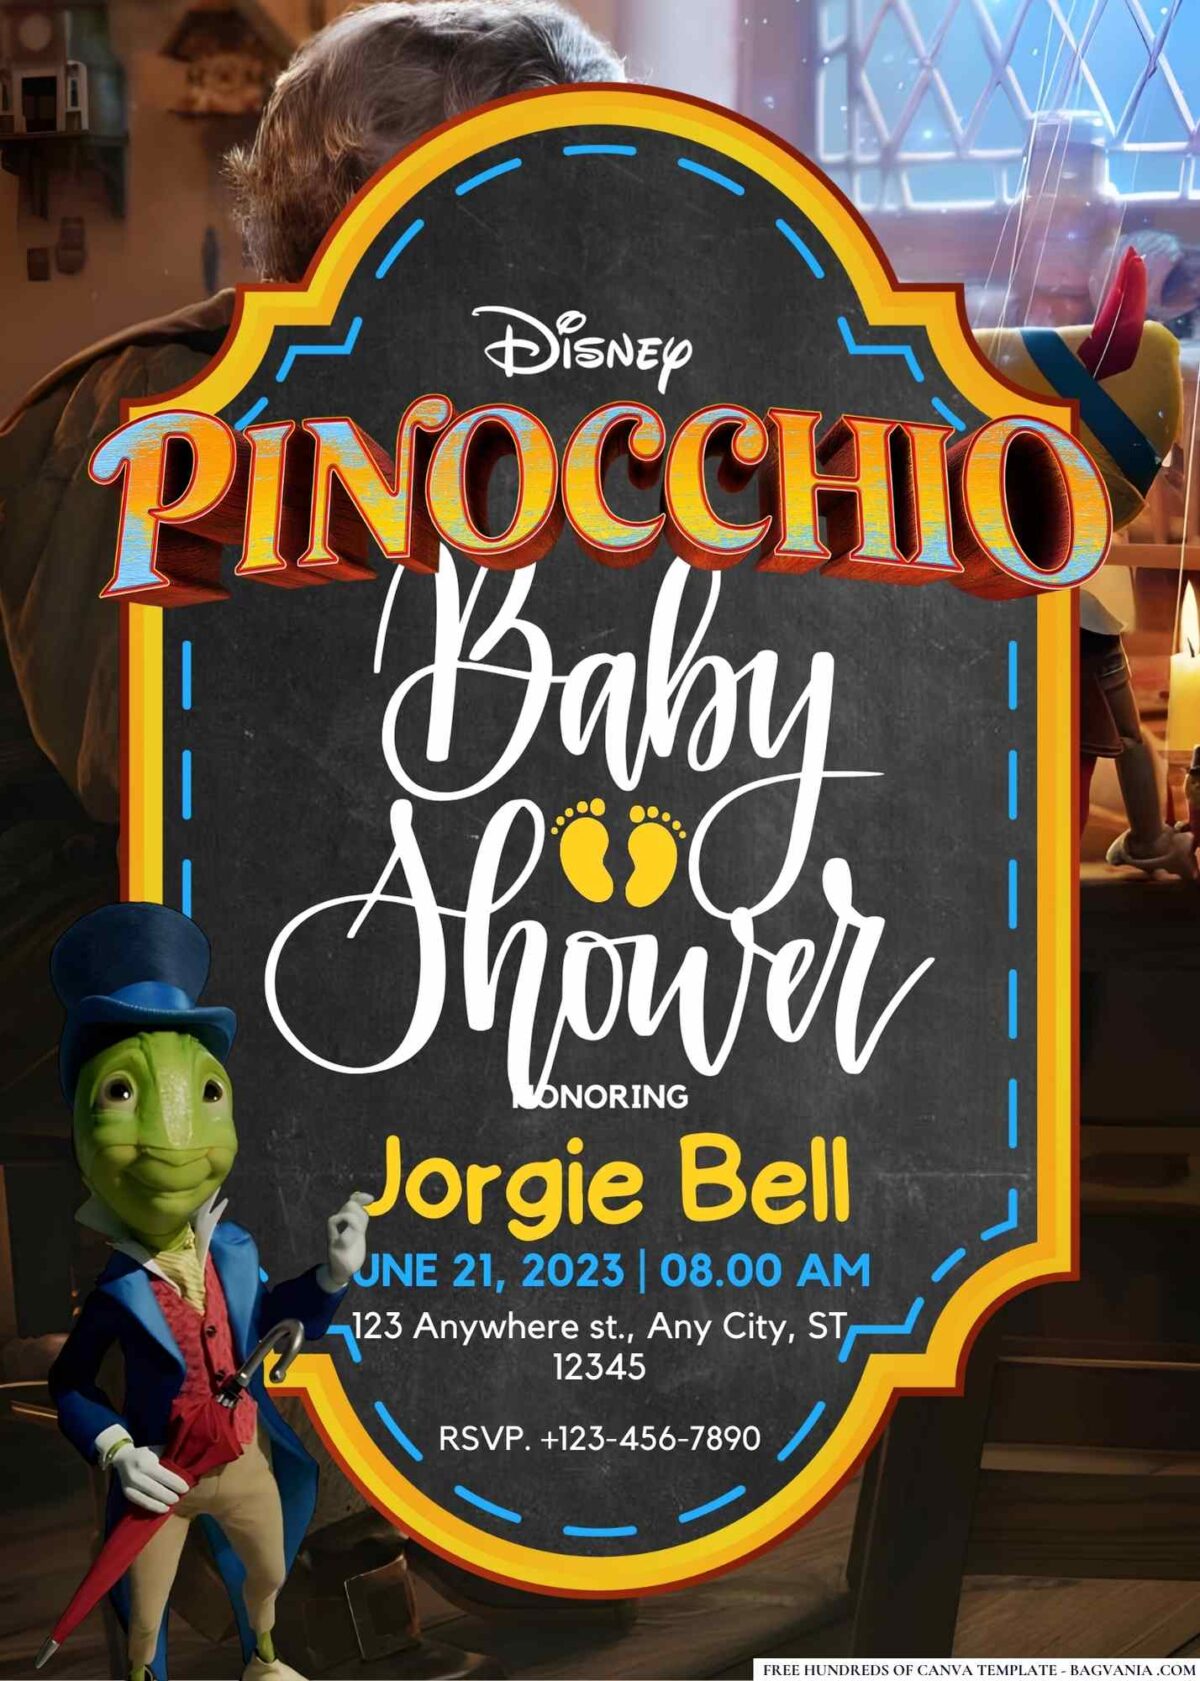 Pinocchio Baby Shower Invitation